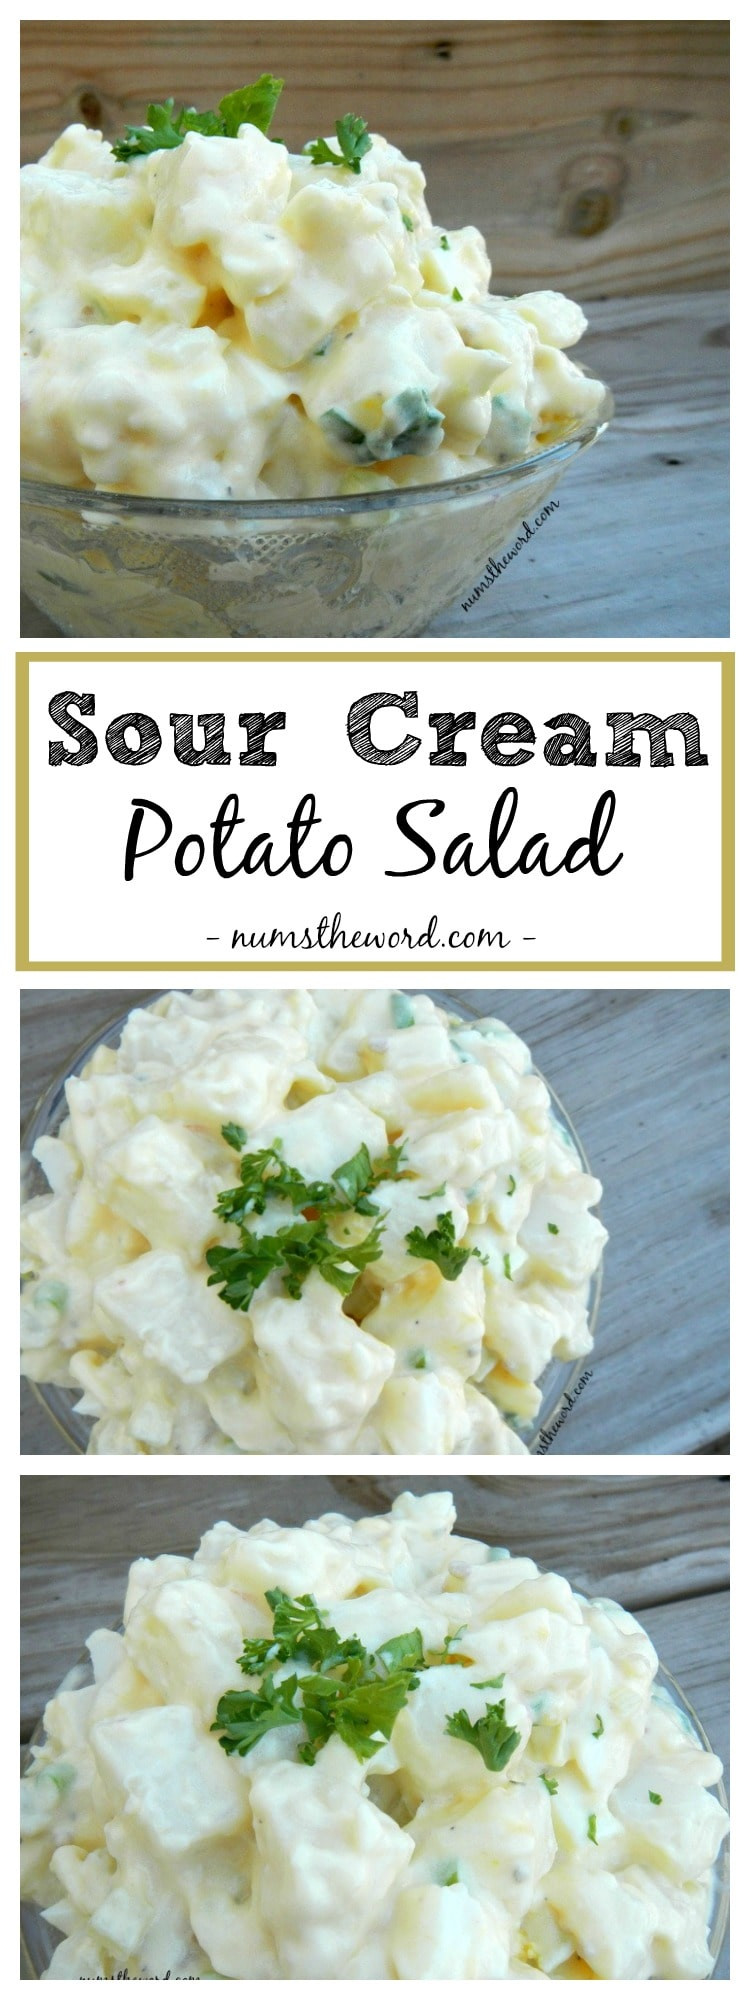 Potato Salad With Sour Cream
 Sour Cream Potato Salad NumsTheWord